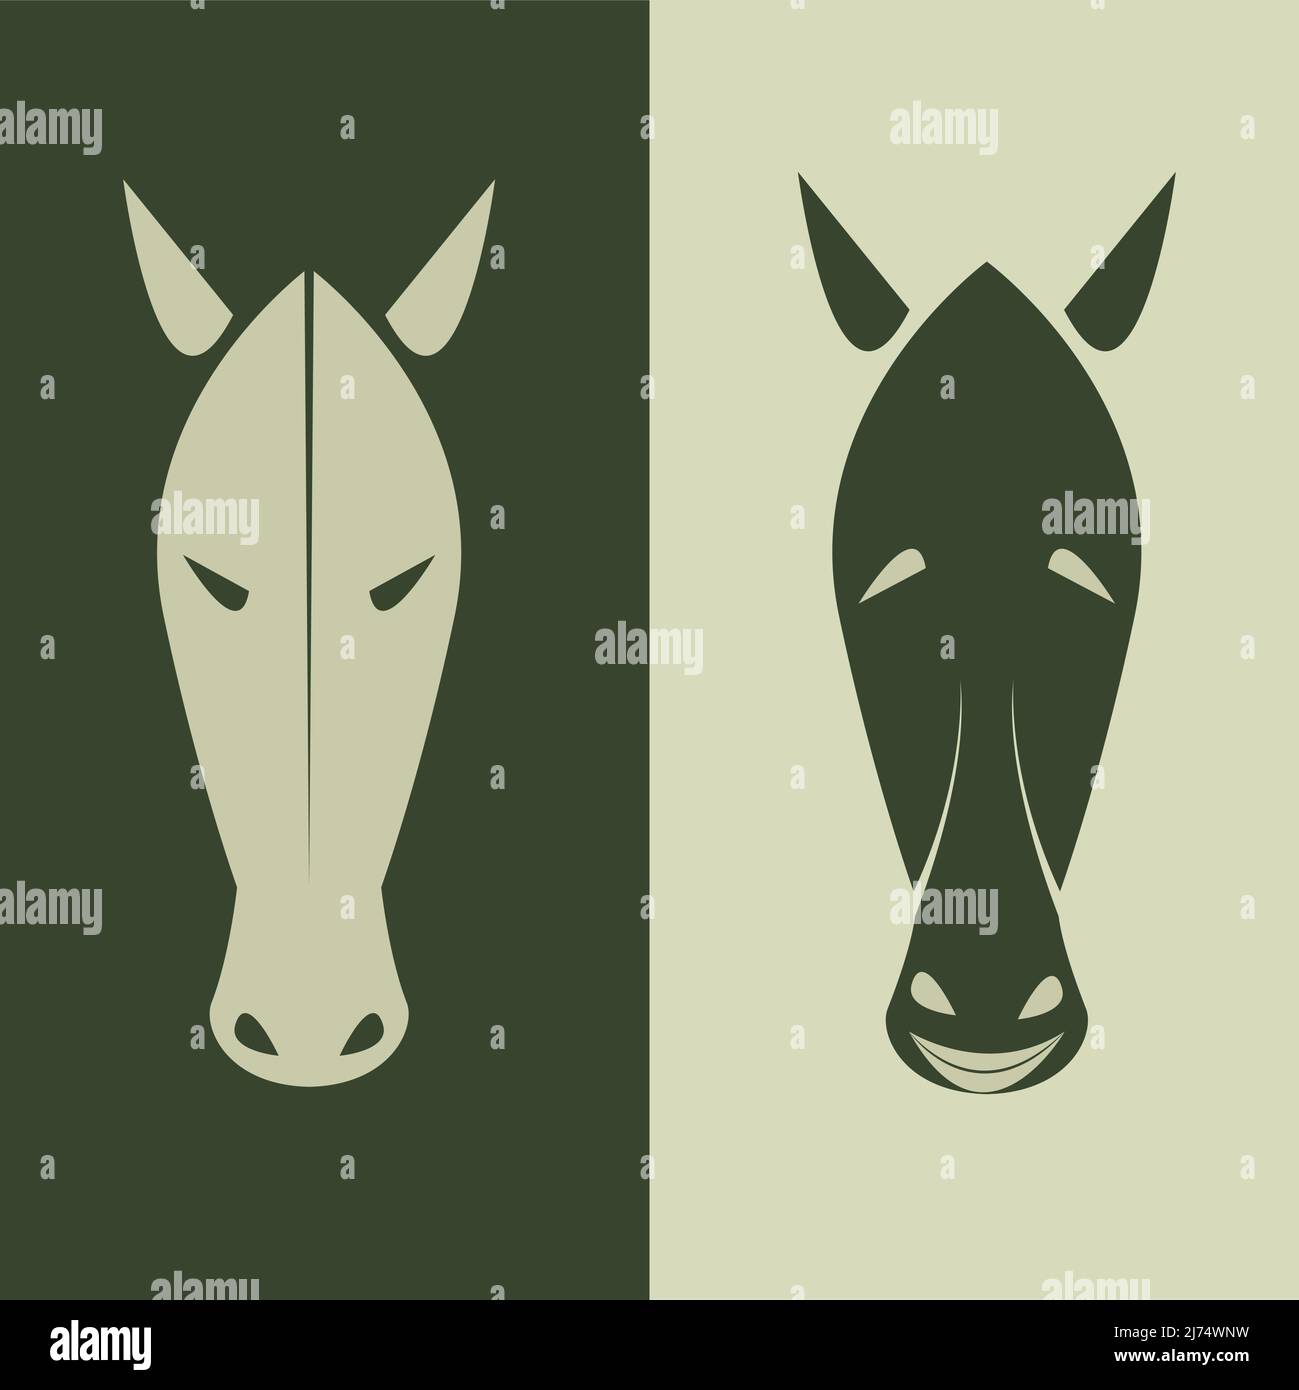 Mascara de caballo Imágenes vectoriales de stock - Alamy